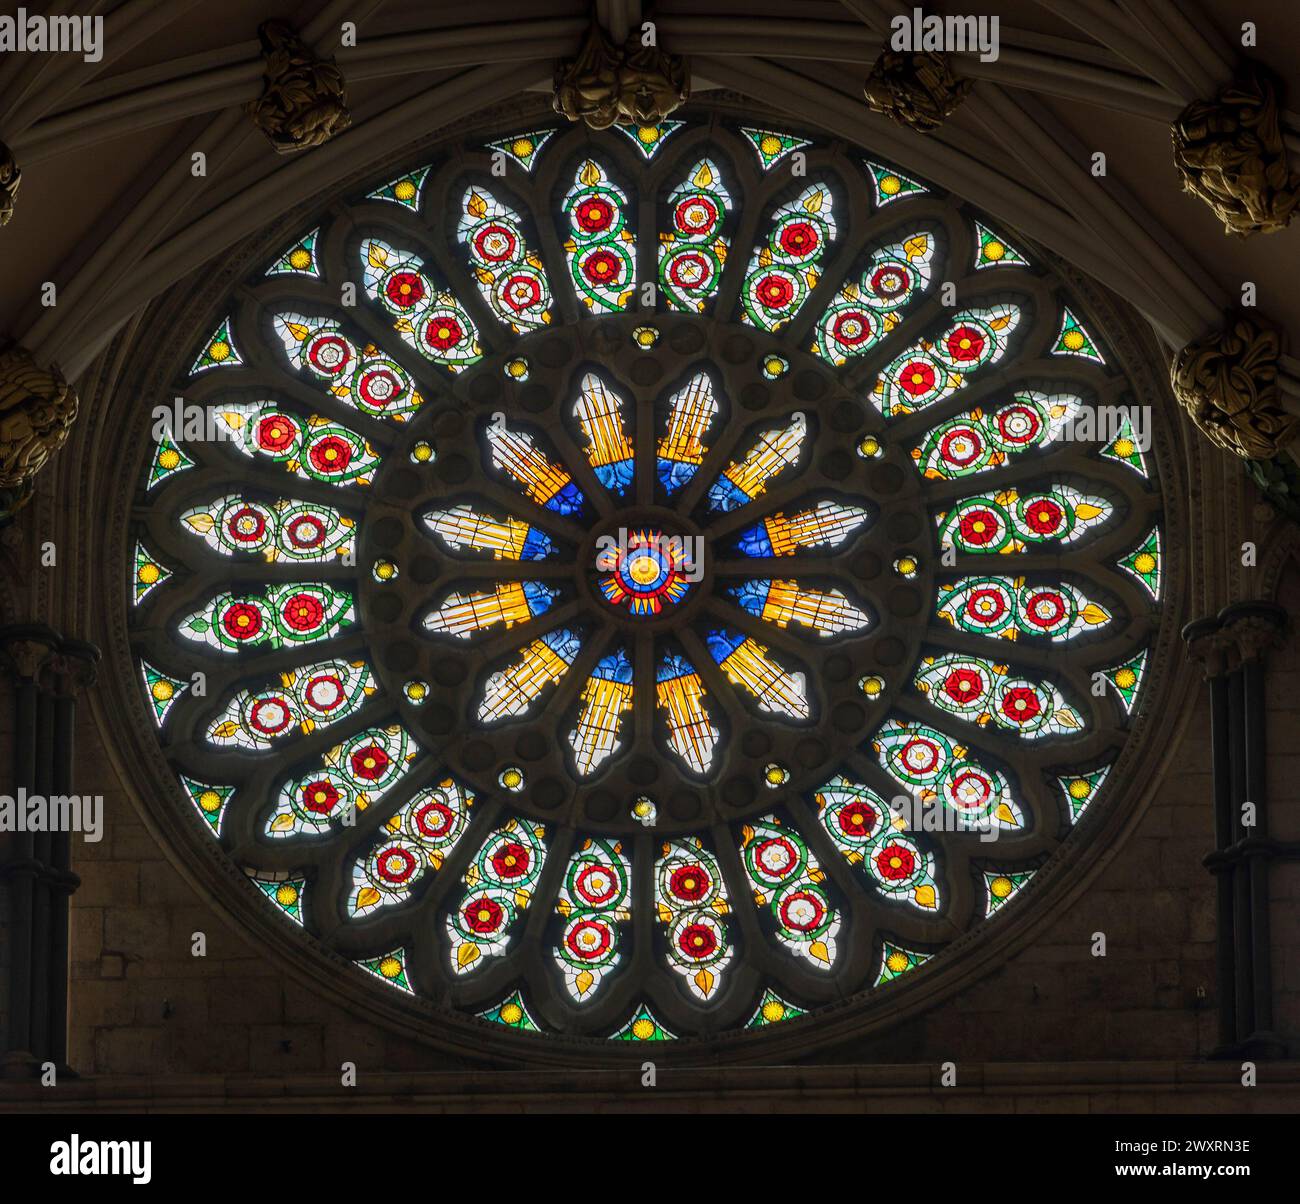 stained glass window, York Minster, York, England Stock Photo